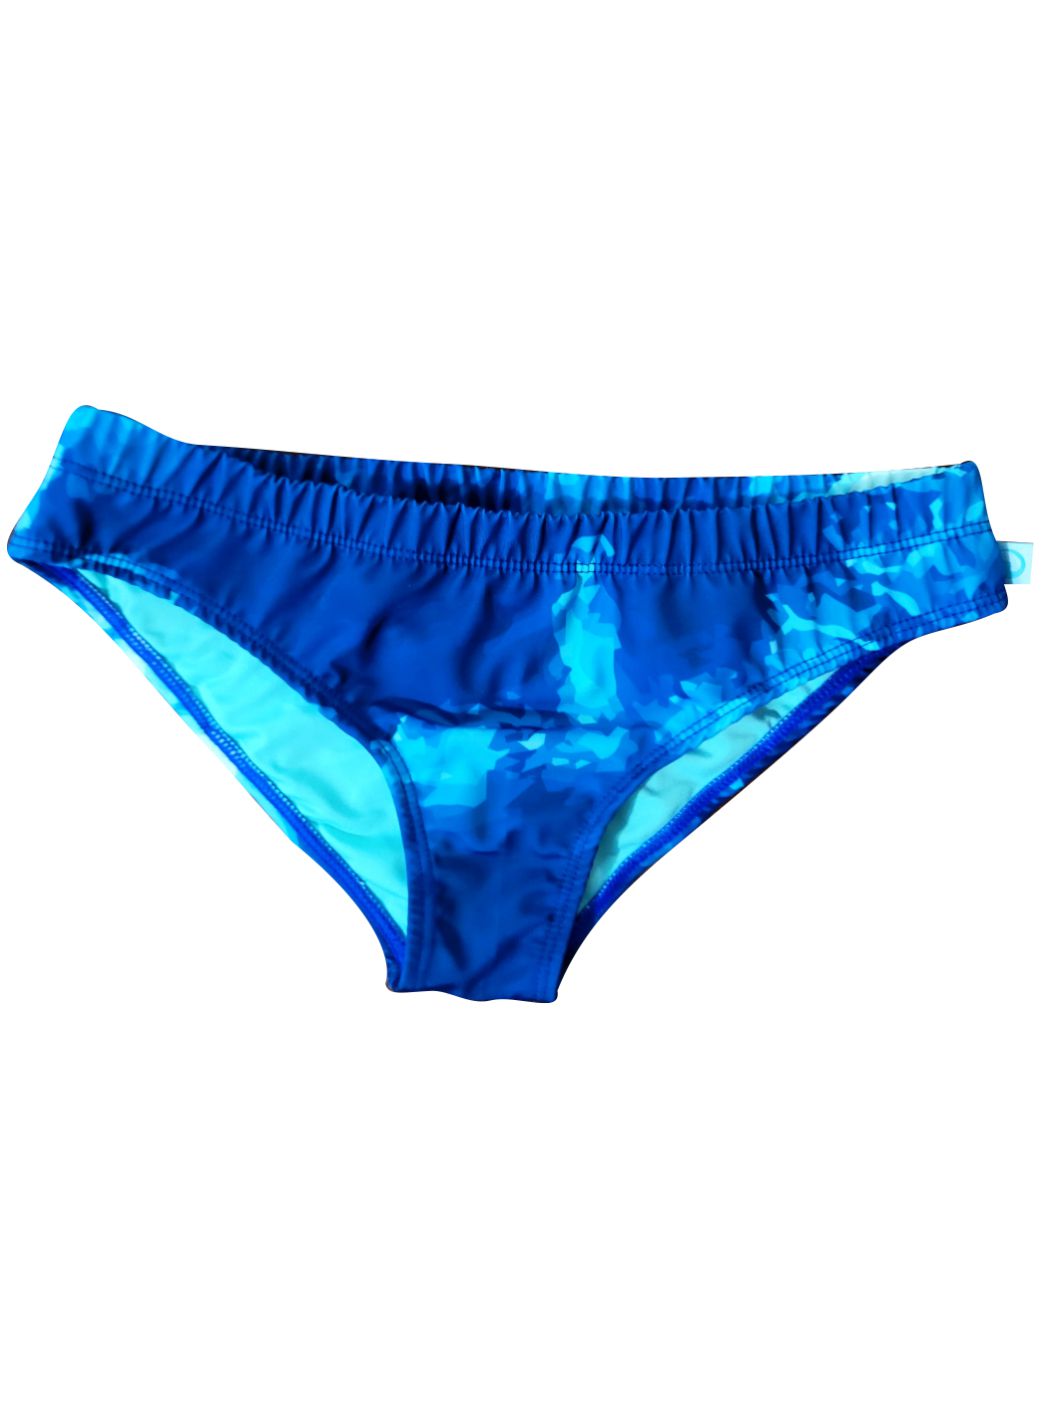 Blue Coral Ocean Low Waist Bikini Bottom